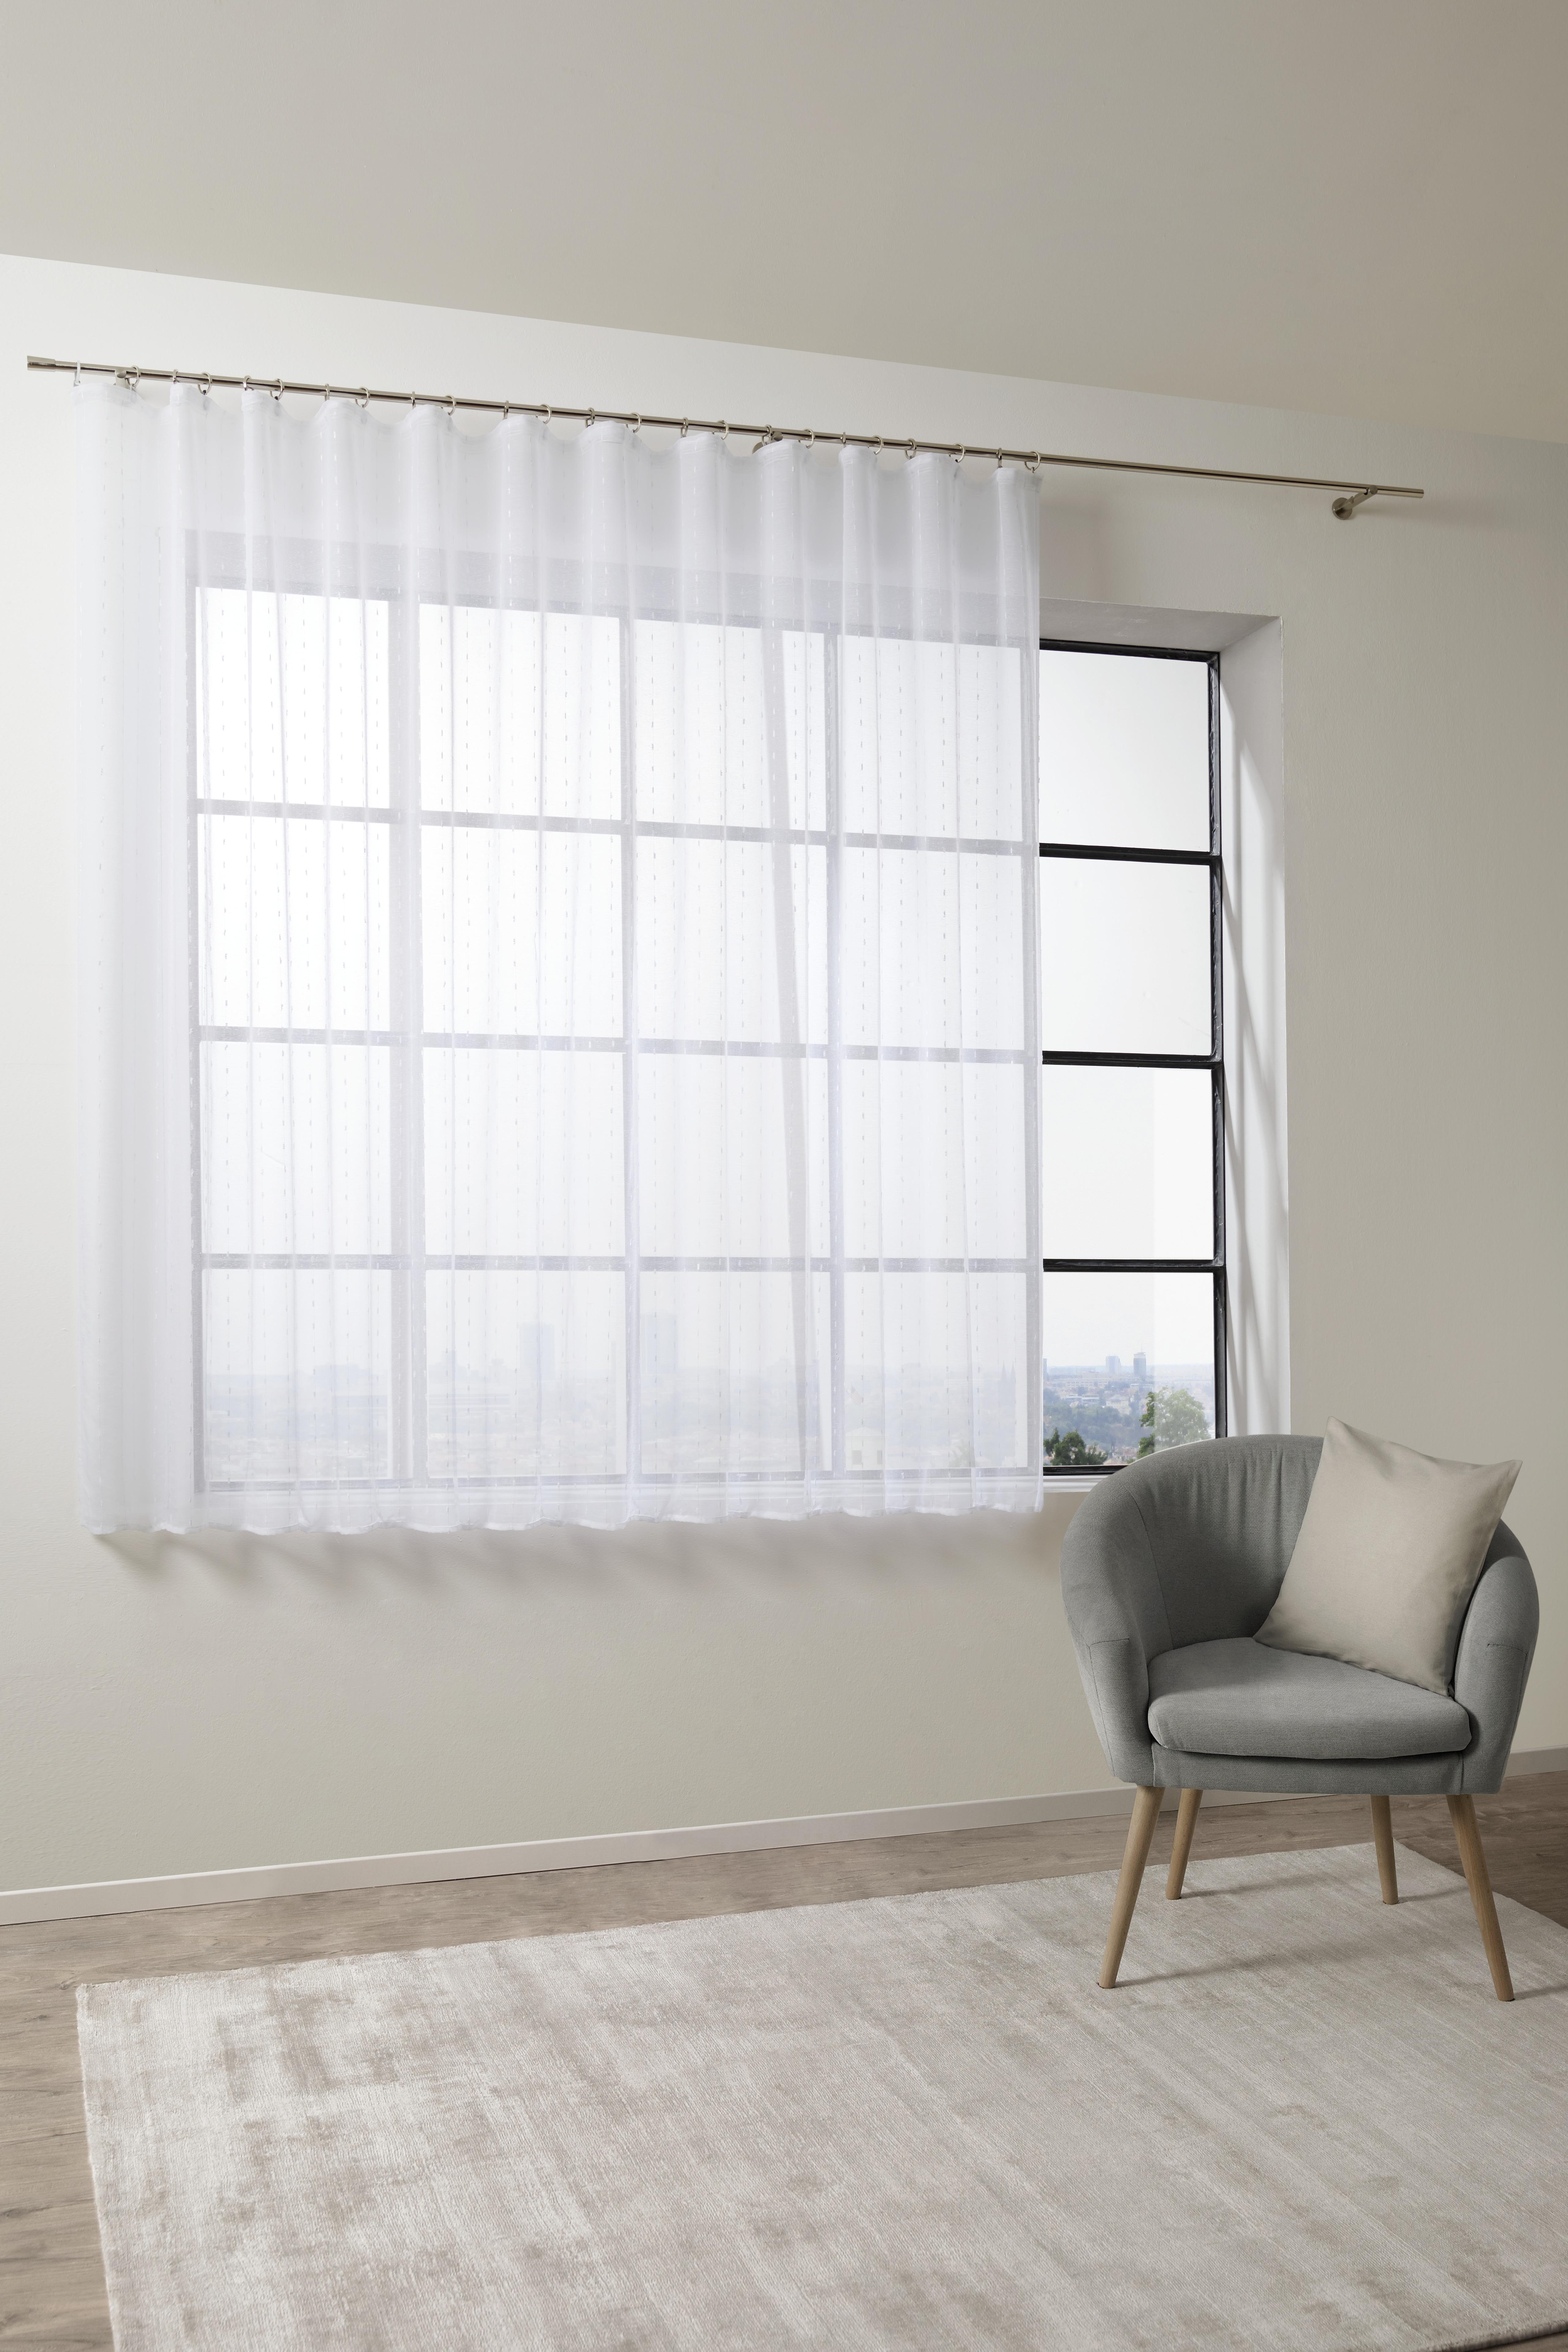 Készfüggöny Lisa 300/175 - Fehér, romantikus/Landhaus, Textil (300/175cm) - Modern Living